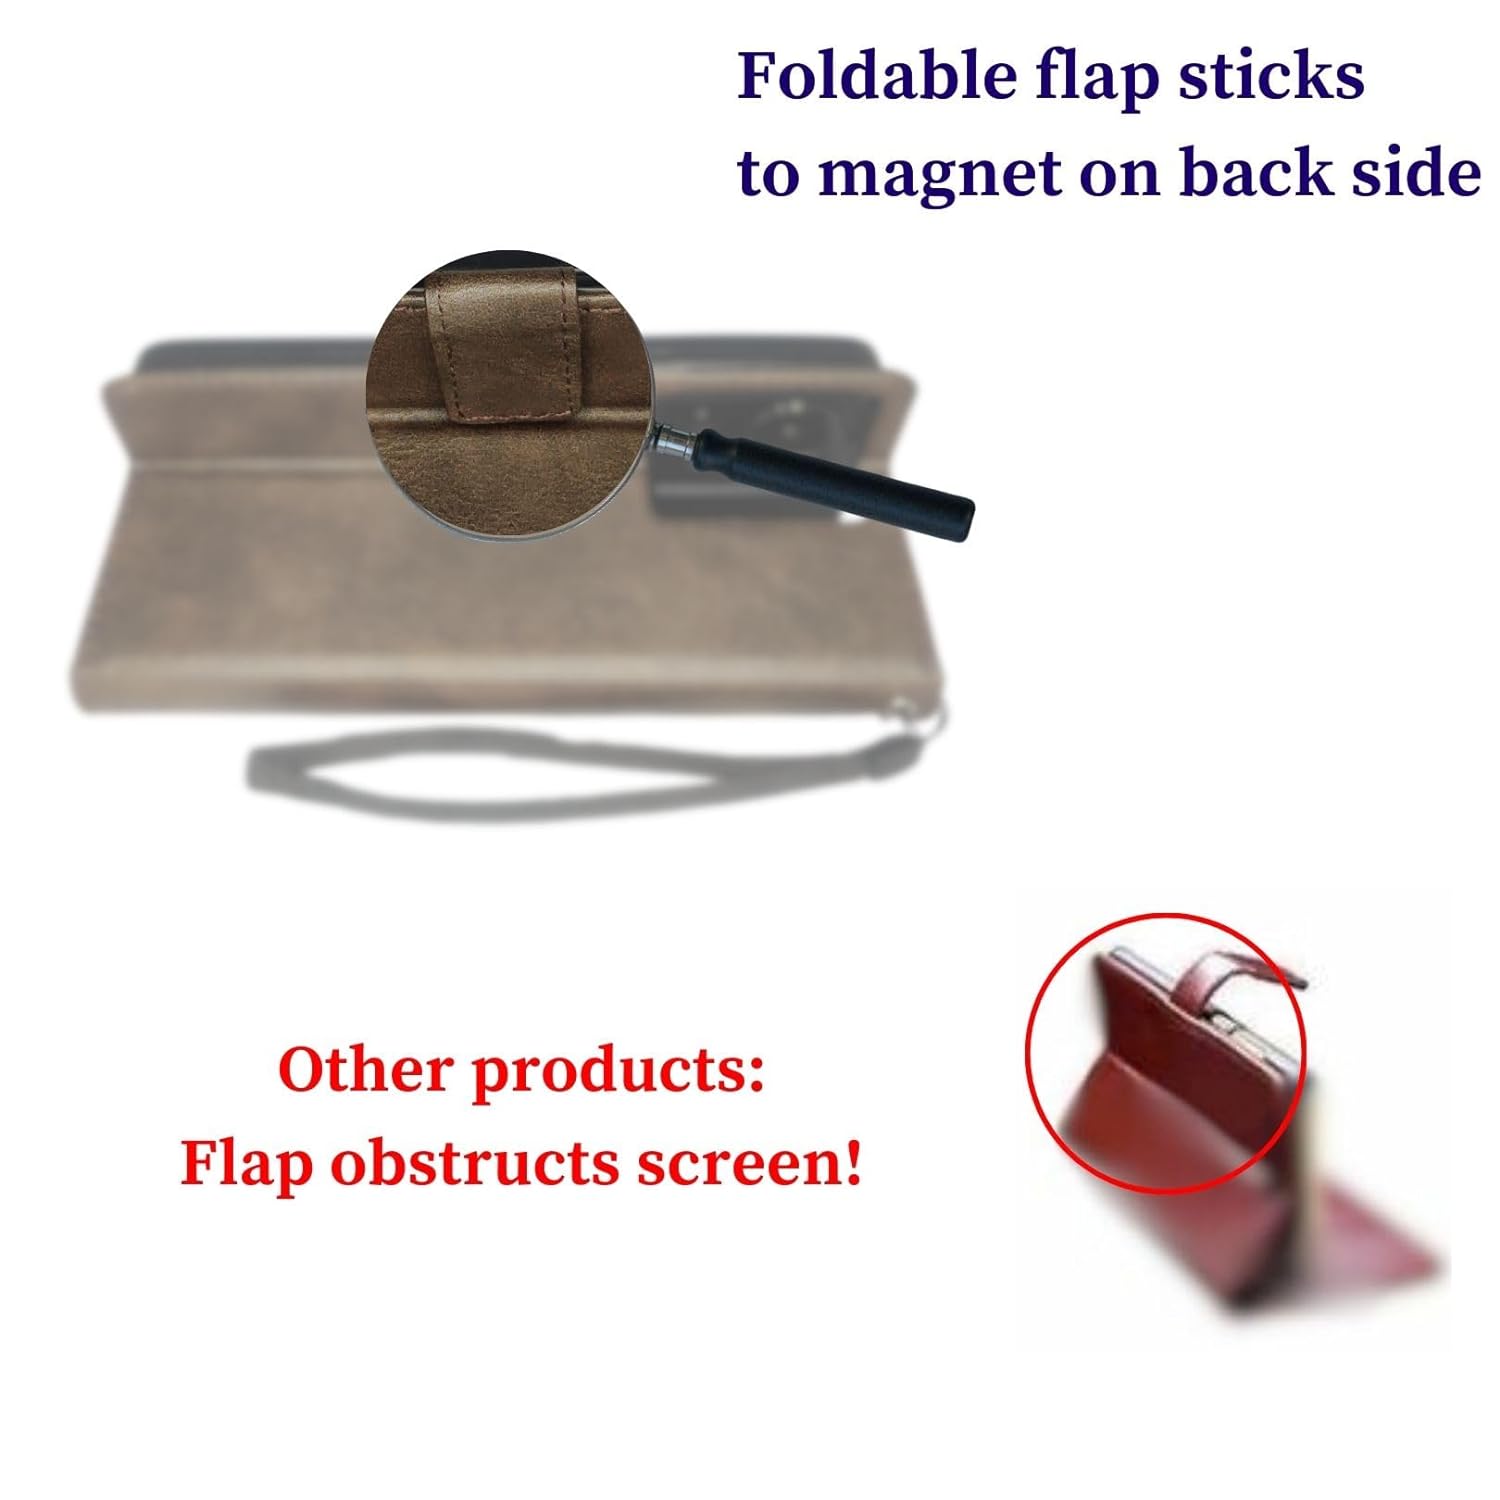 Bracevor Premium Design Flip Cover leather wallet case for Realme 11 Pro 5G